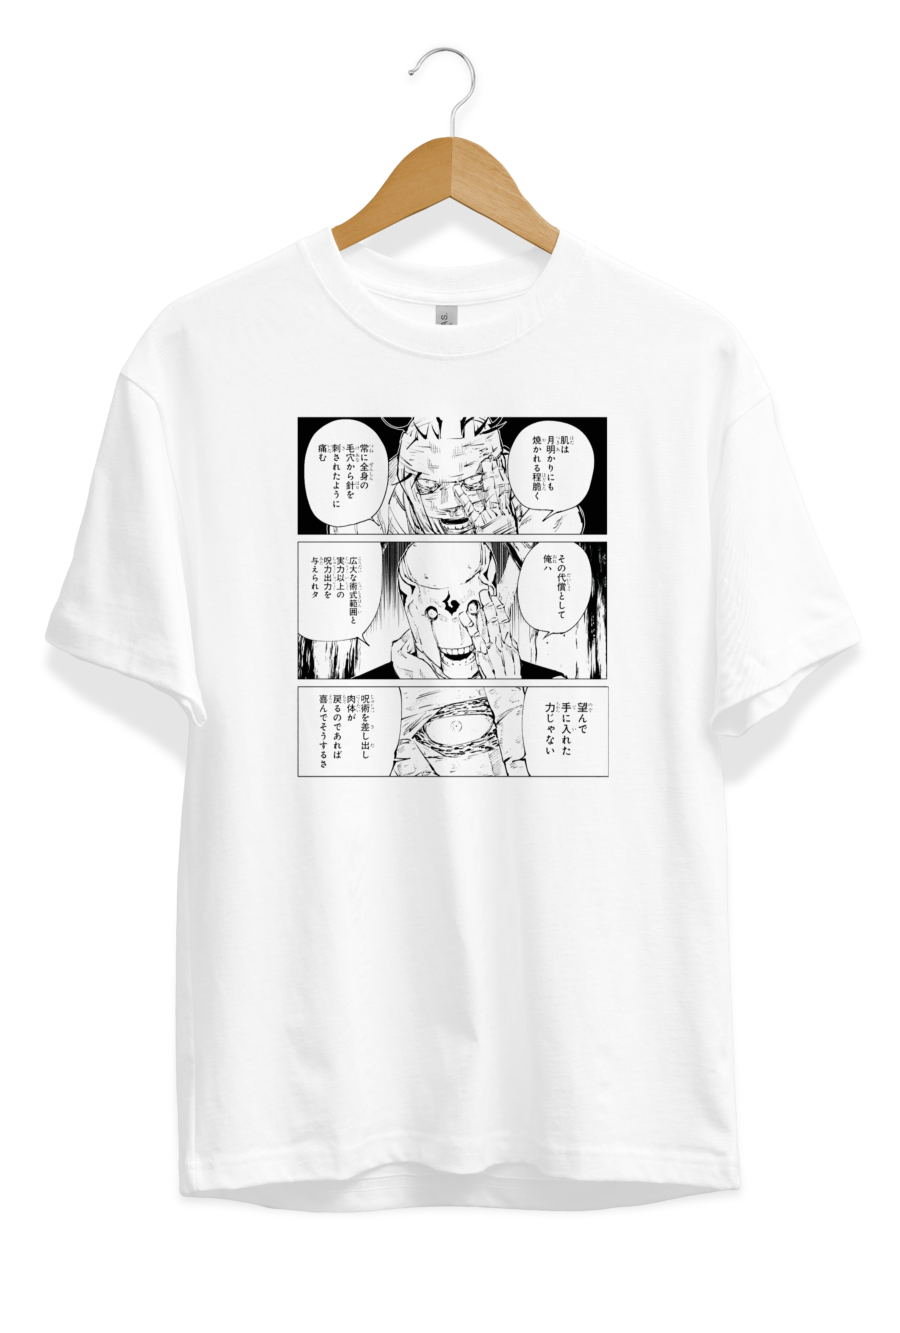 Mechamaru #1 T-Shirt Design Print